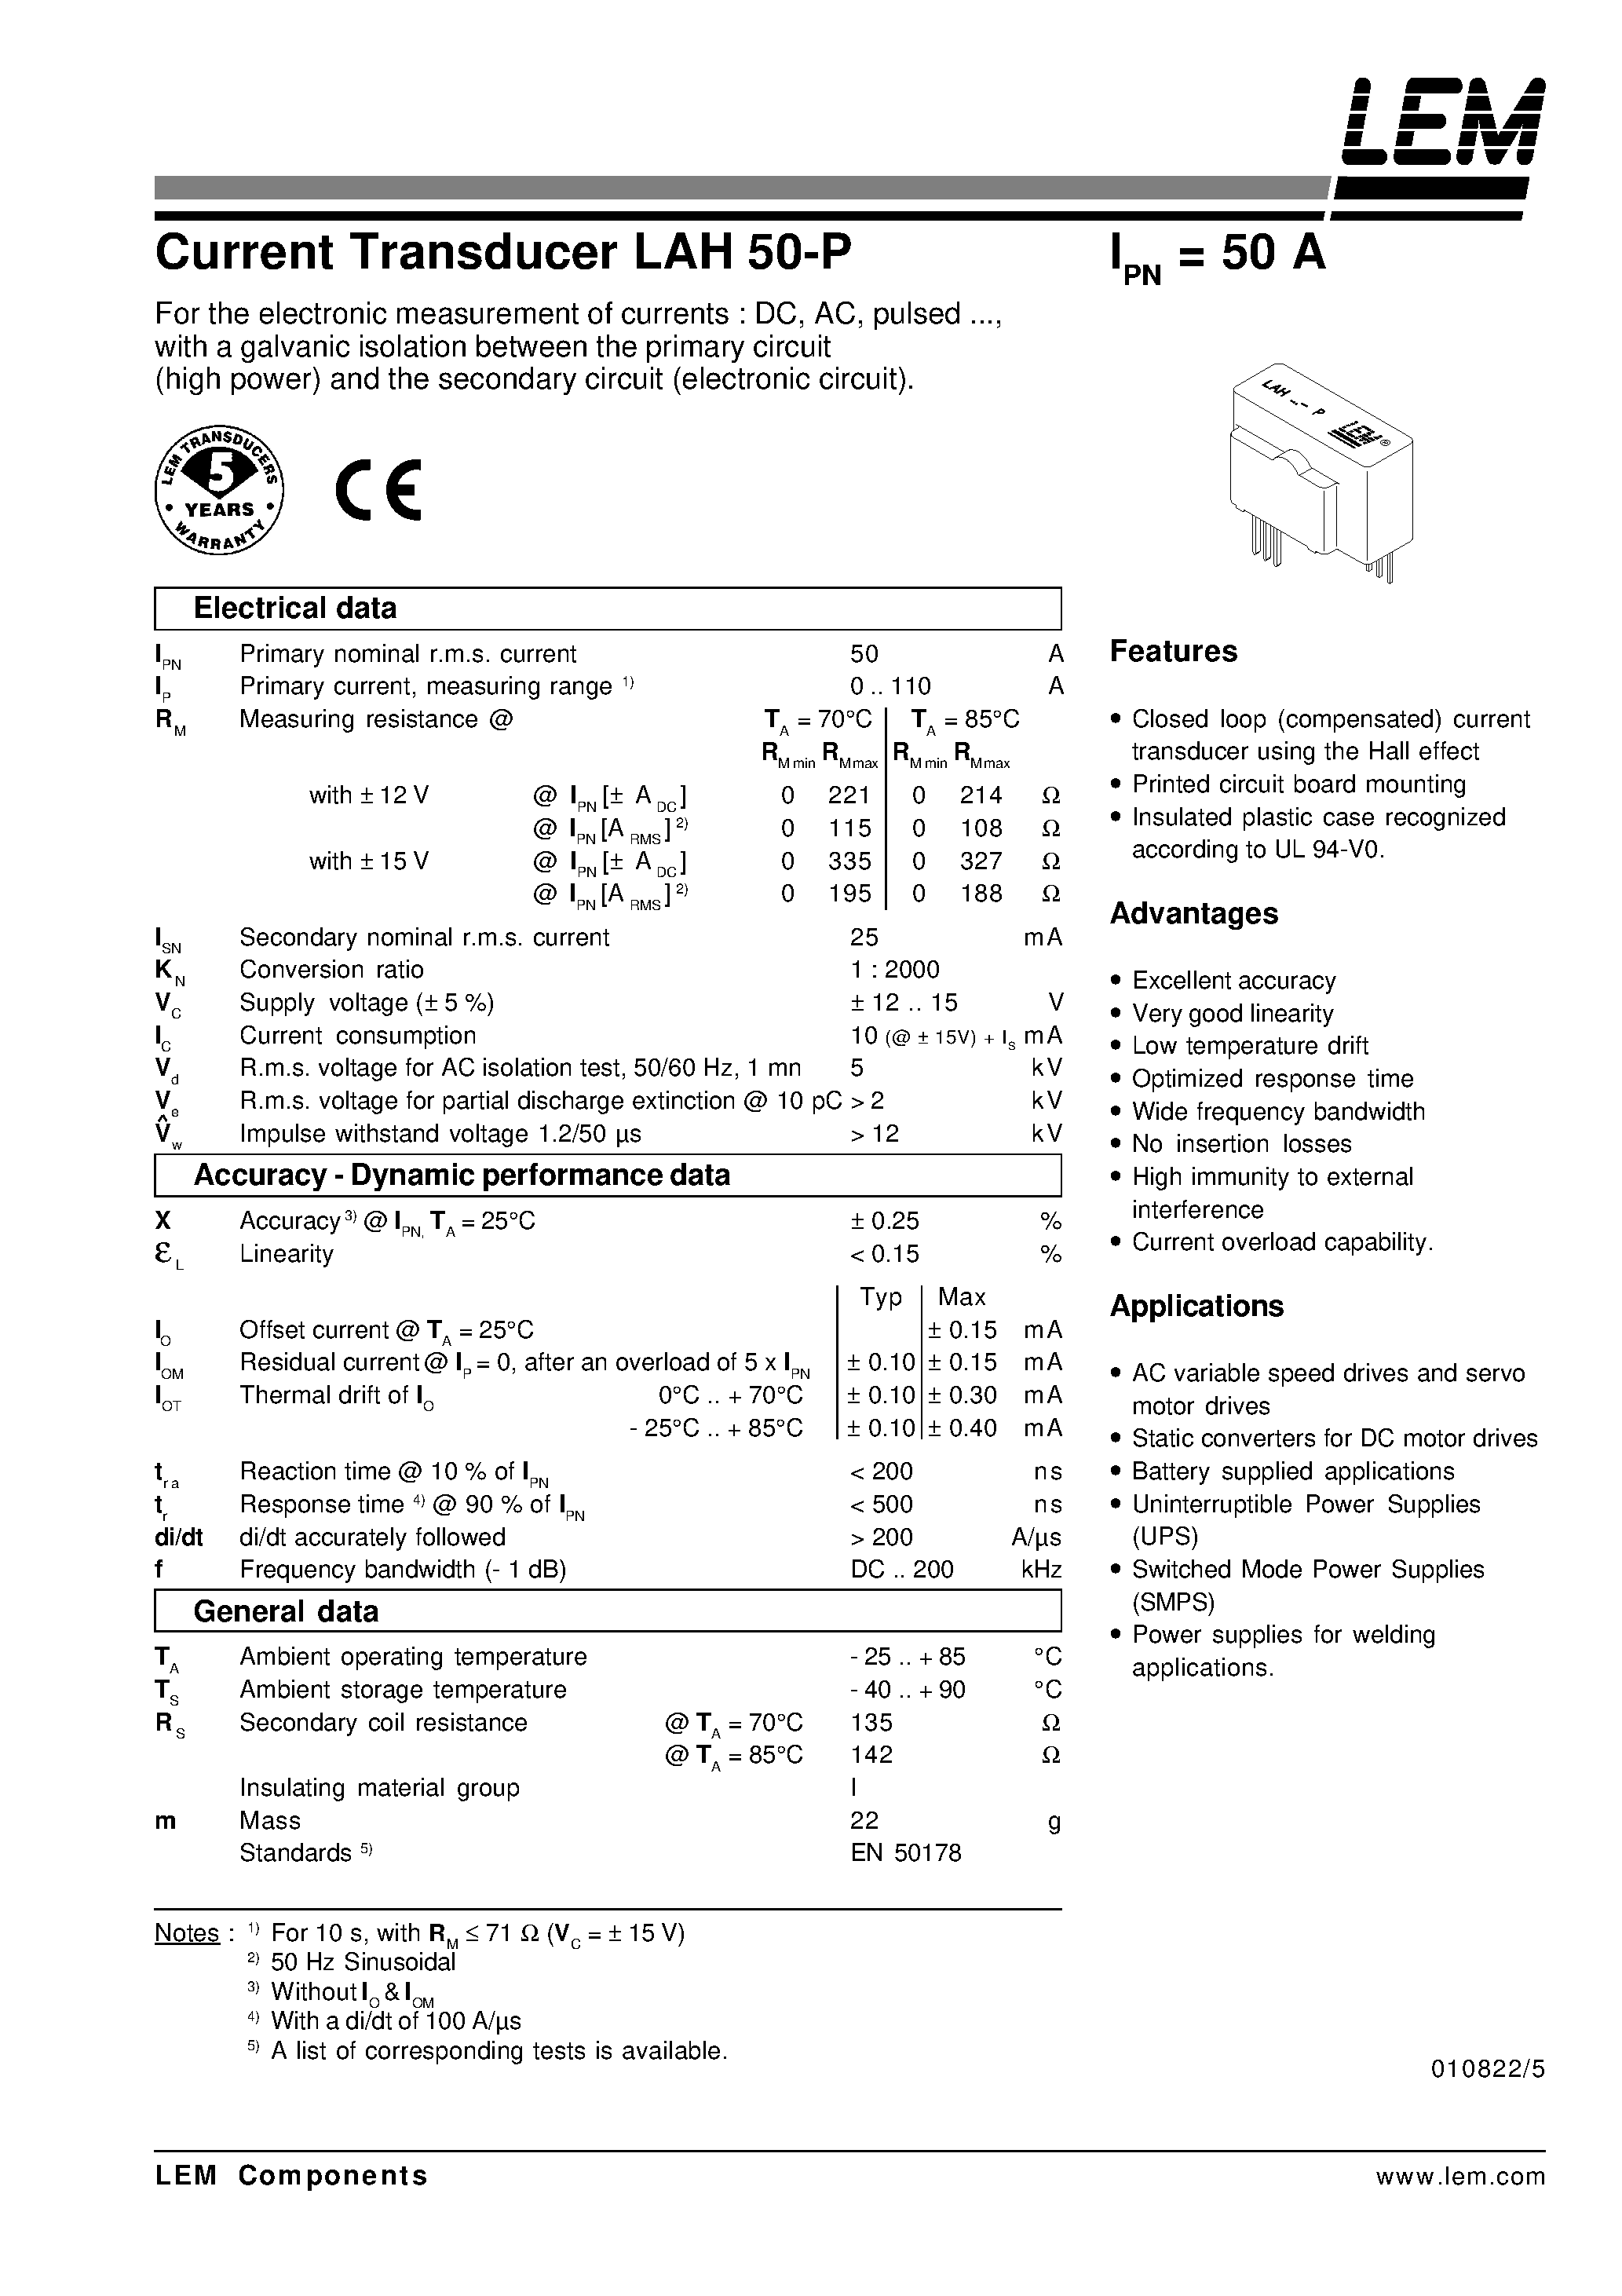 Datasheet LAH50-P - Current Transducer LAH 50-P page 1